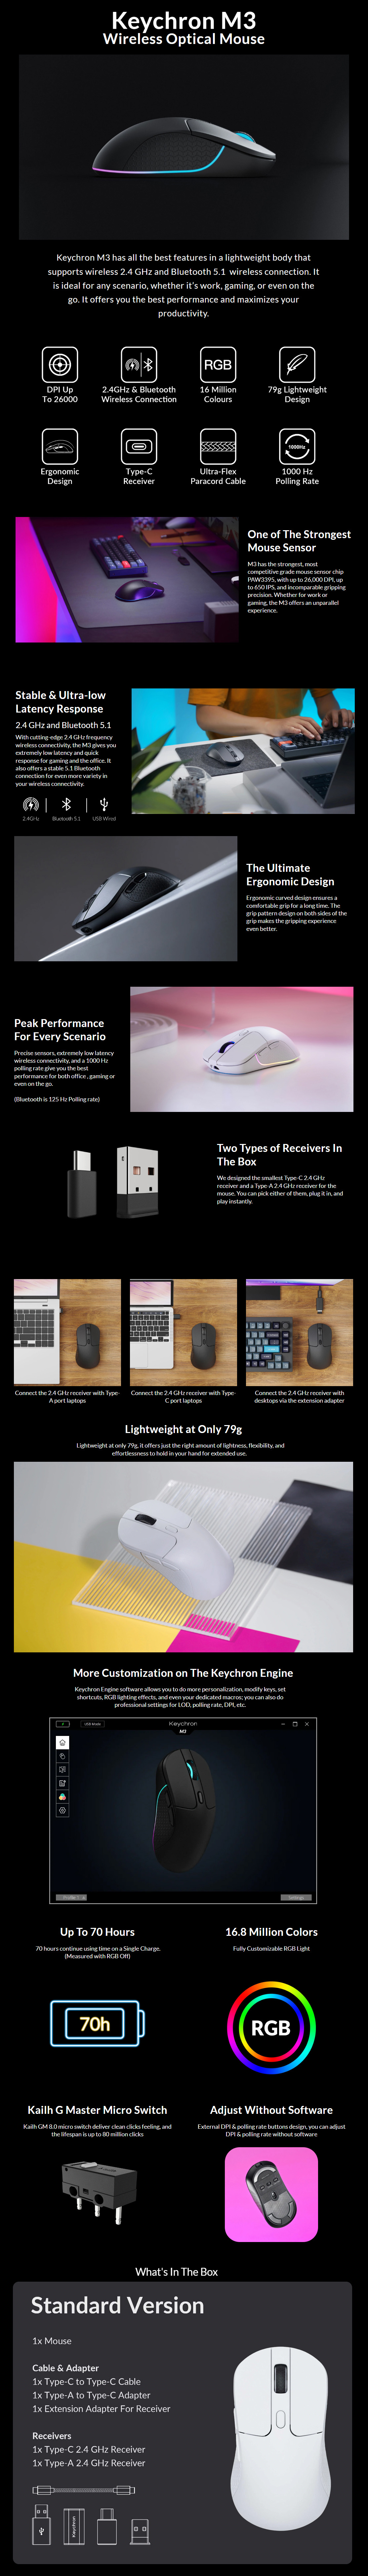 Keychron-M3-Wireless-Bluetooth-RGB-Light-Optical-Mouse-for-Mac-Windows-White-1